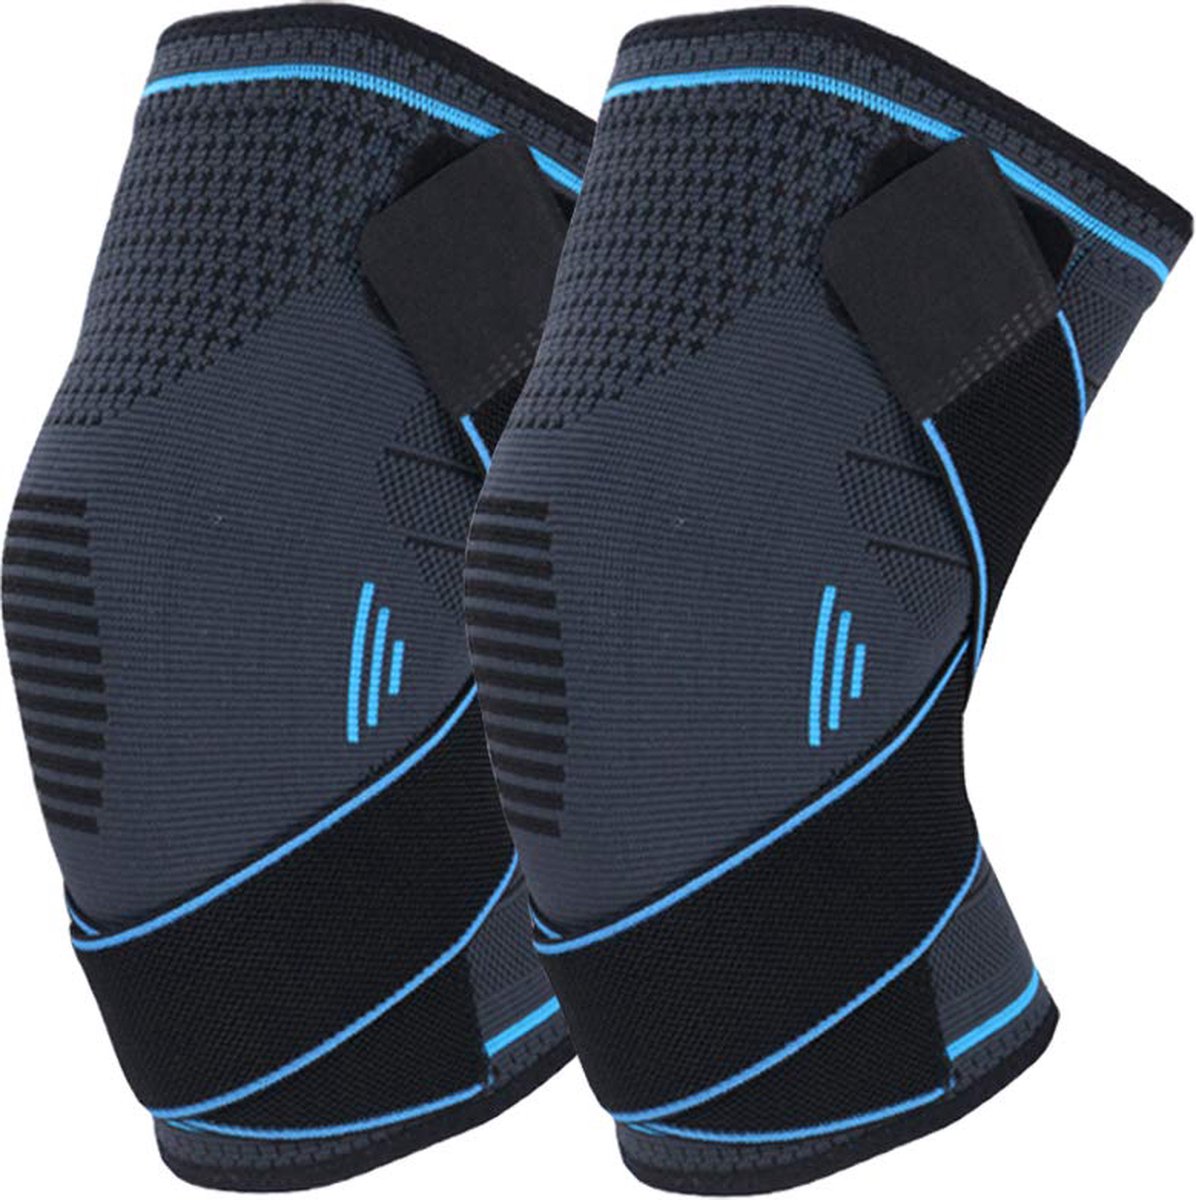 MJ Sports Premium Knee Sleeves - Kniebrace - Knieband - Powerlifting - Fitness - Set van 2 - Maat M - Unisex - Blauw